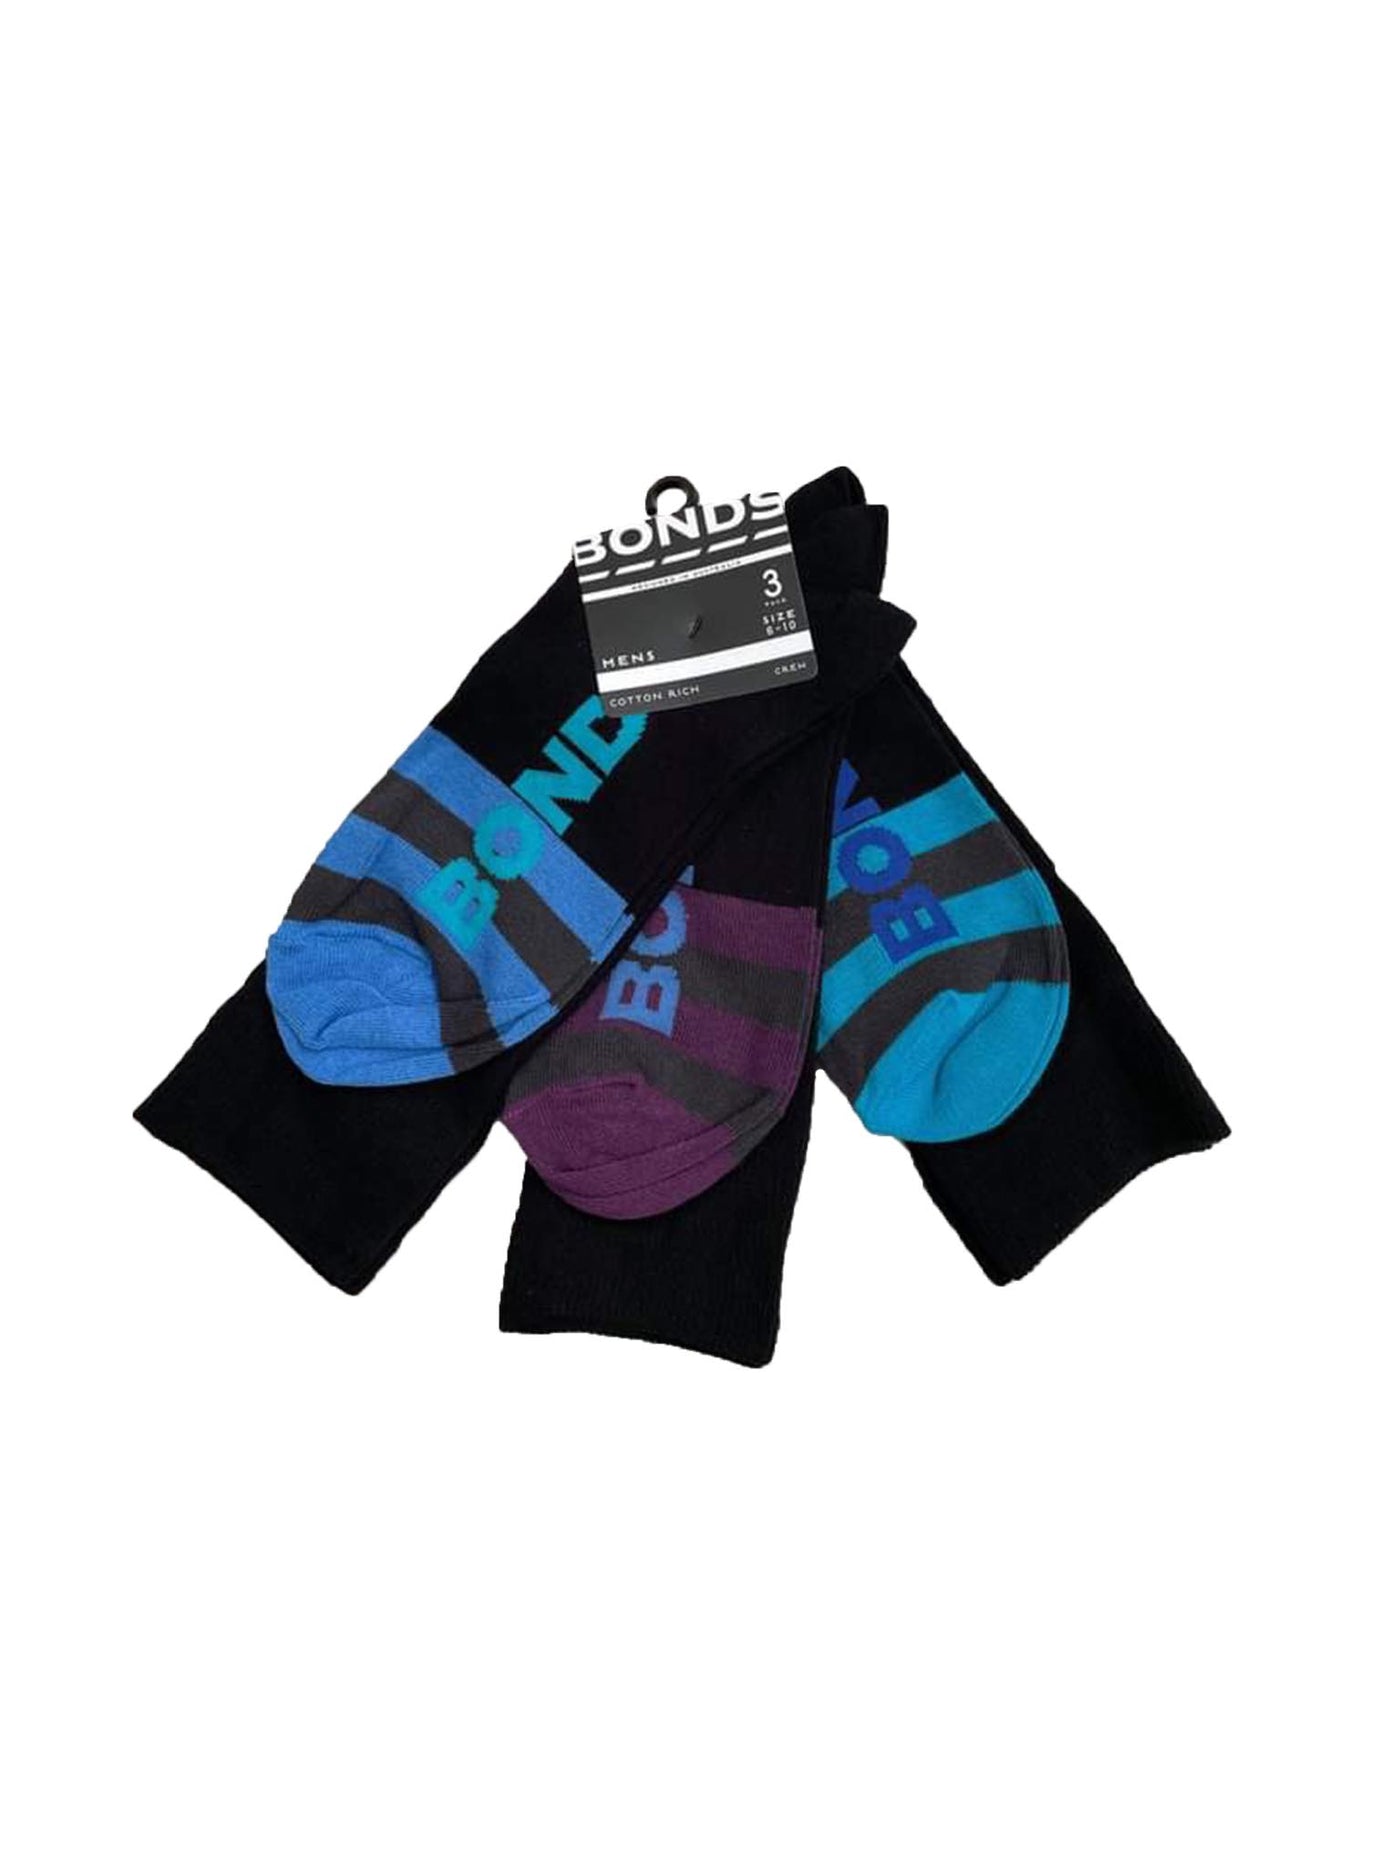 Bonds Mens Business Crew Socks 3 Pack Black With Blue/Purple/Aqua Stripe-Outlet Shop For Kids